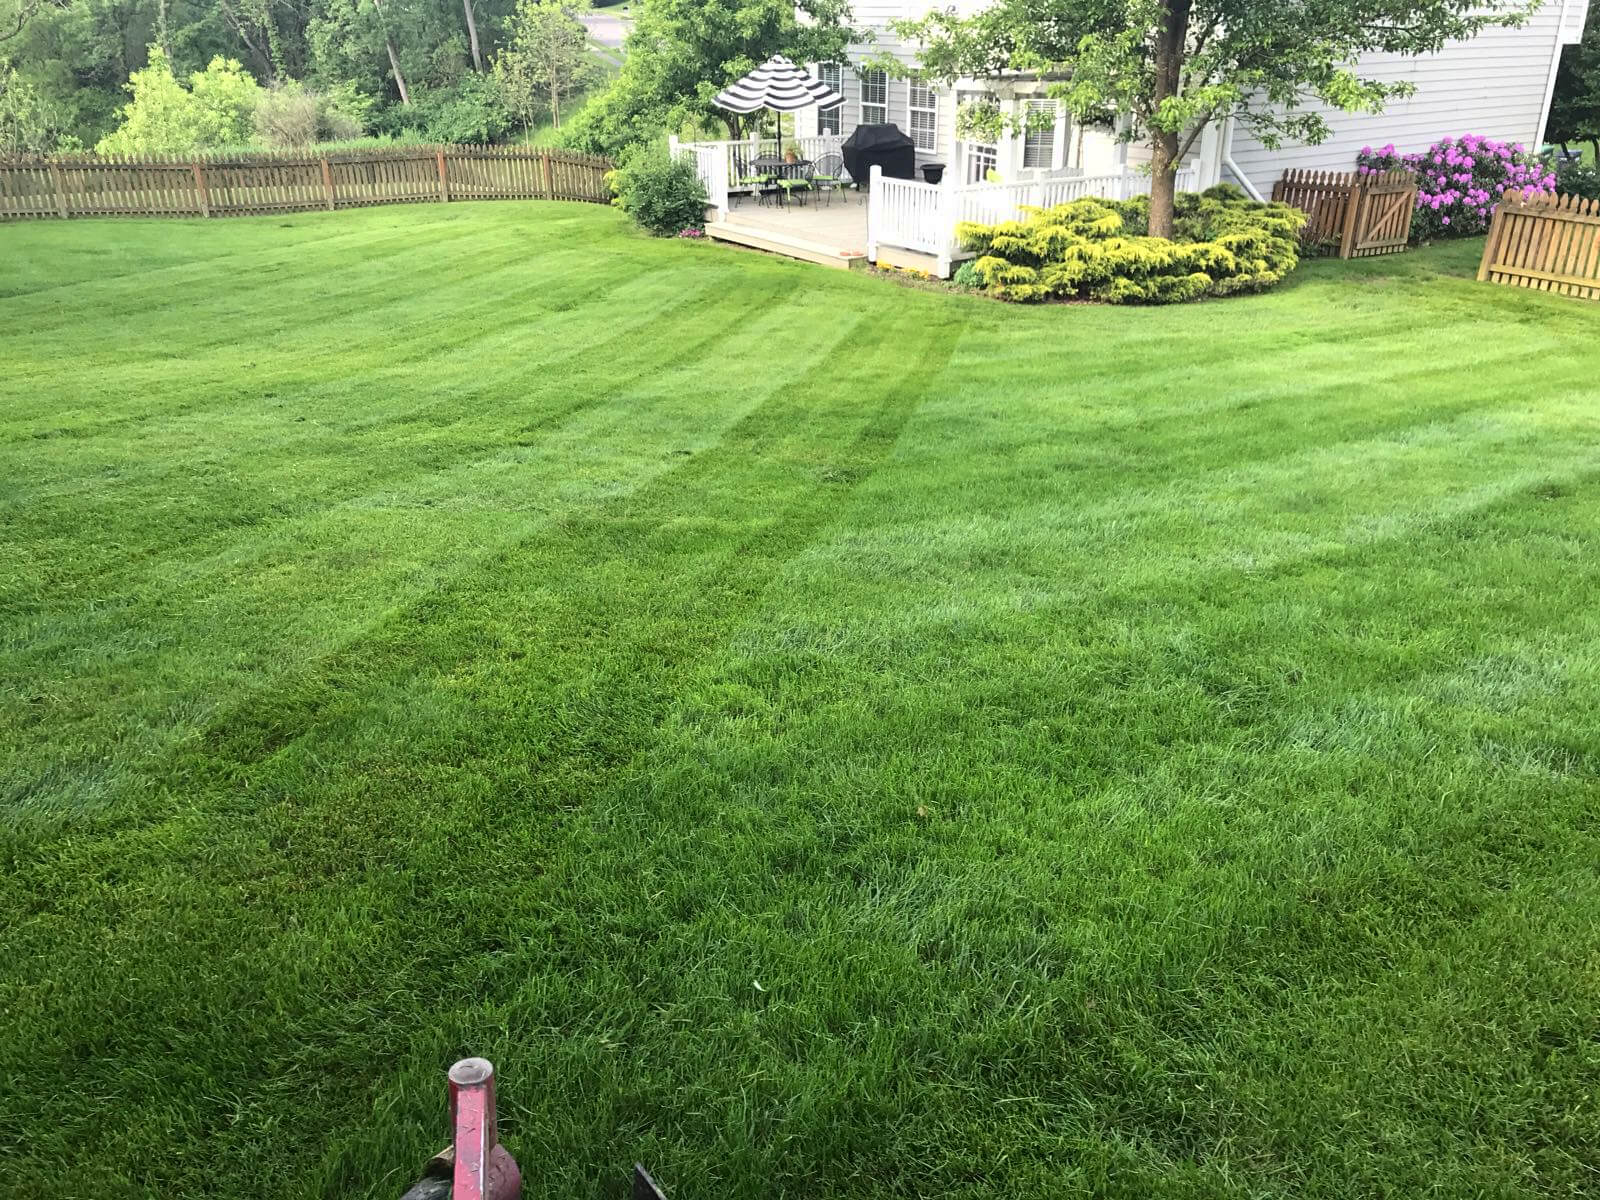 grass cutting lawn need someone service maintenance company landscape